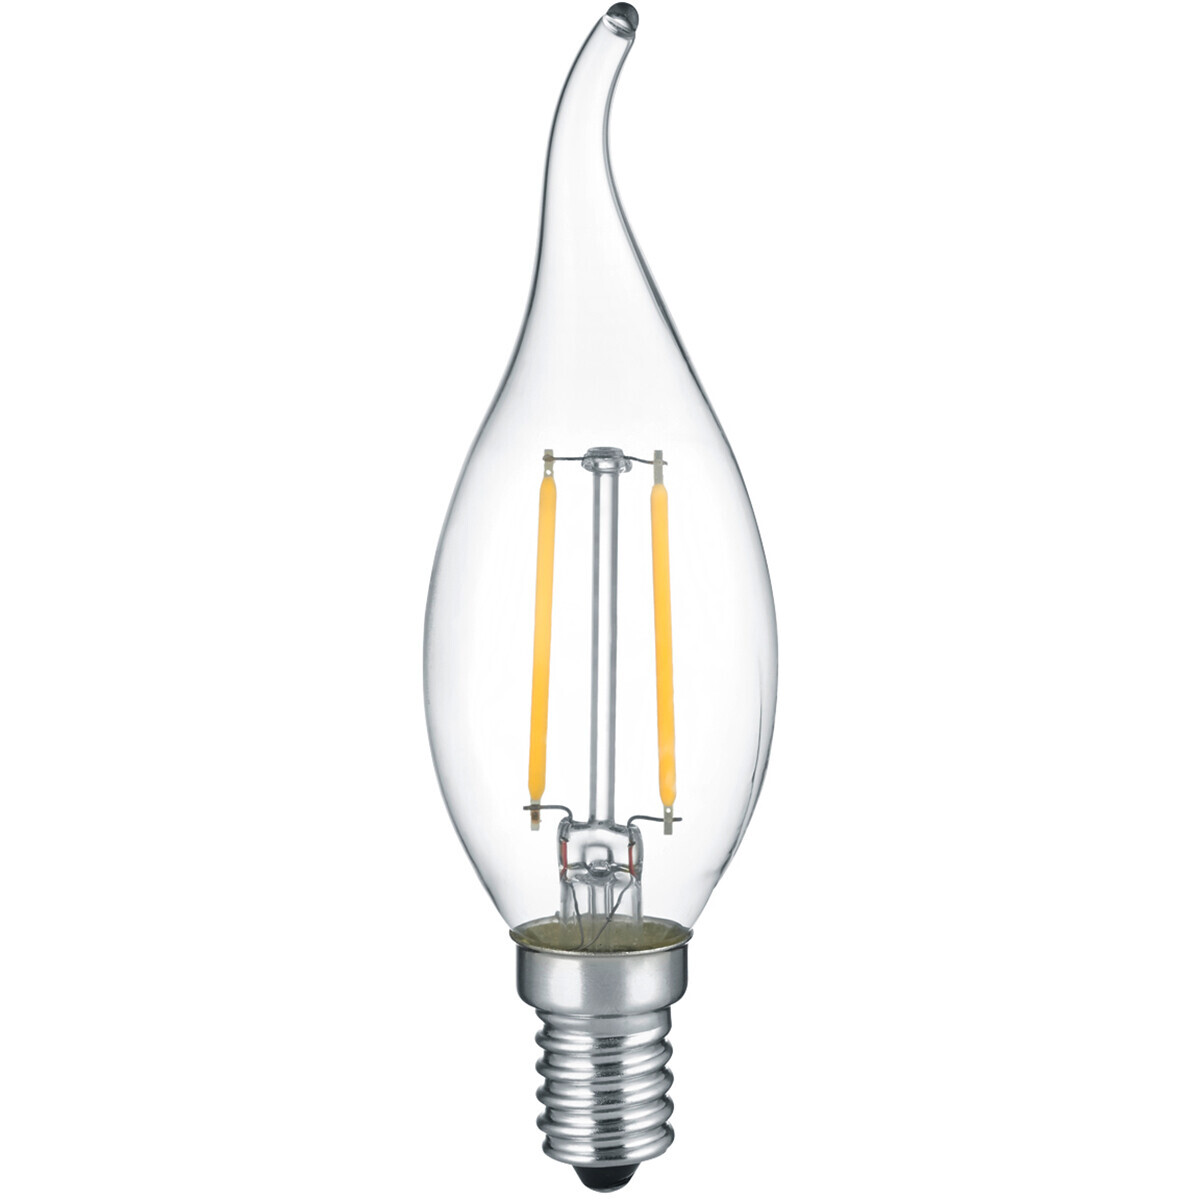 BES LED LED Lamp - Kaarslamp - Filament - Trion Kirza - E14 Fitting - 2W - Warm Wit-2700K - Transparant Helder - Glas